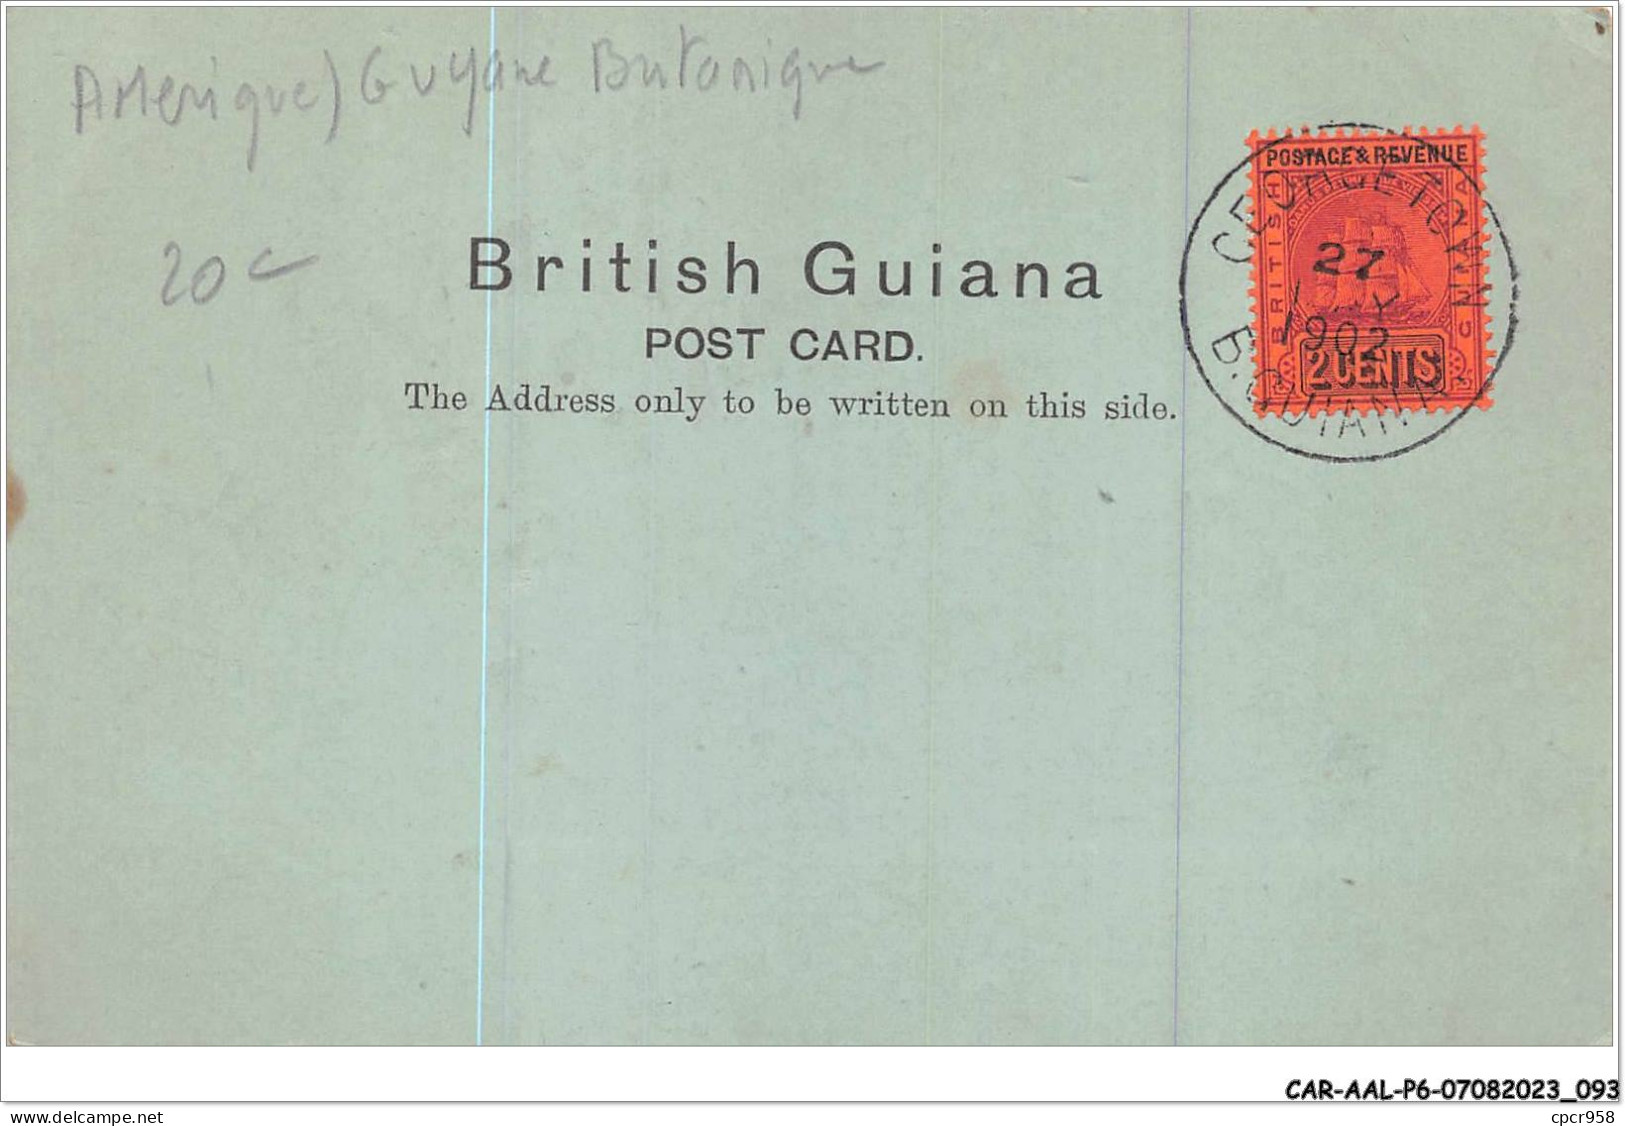 CAR-AALP6-GUYANE BRITANIQUE-0525 - Indian's Rest House Baramanie Waini River British Guiana South-Ameriha - Guyana (ex-Guyane Britannique)